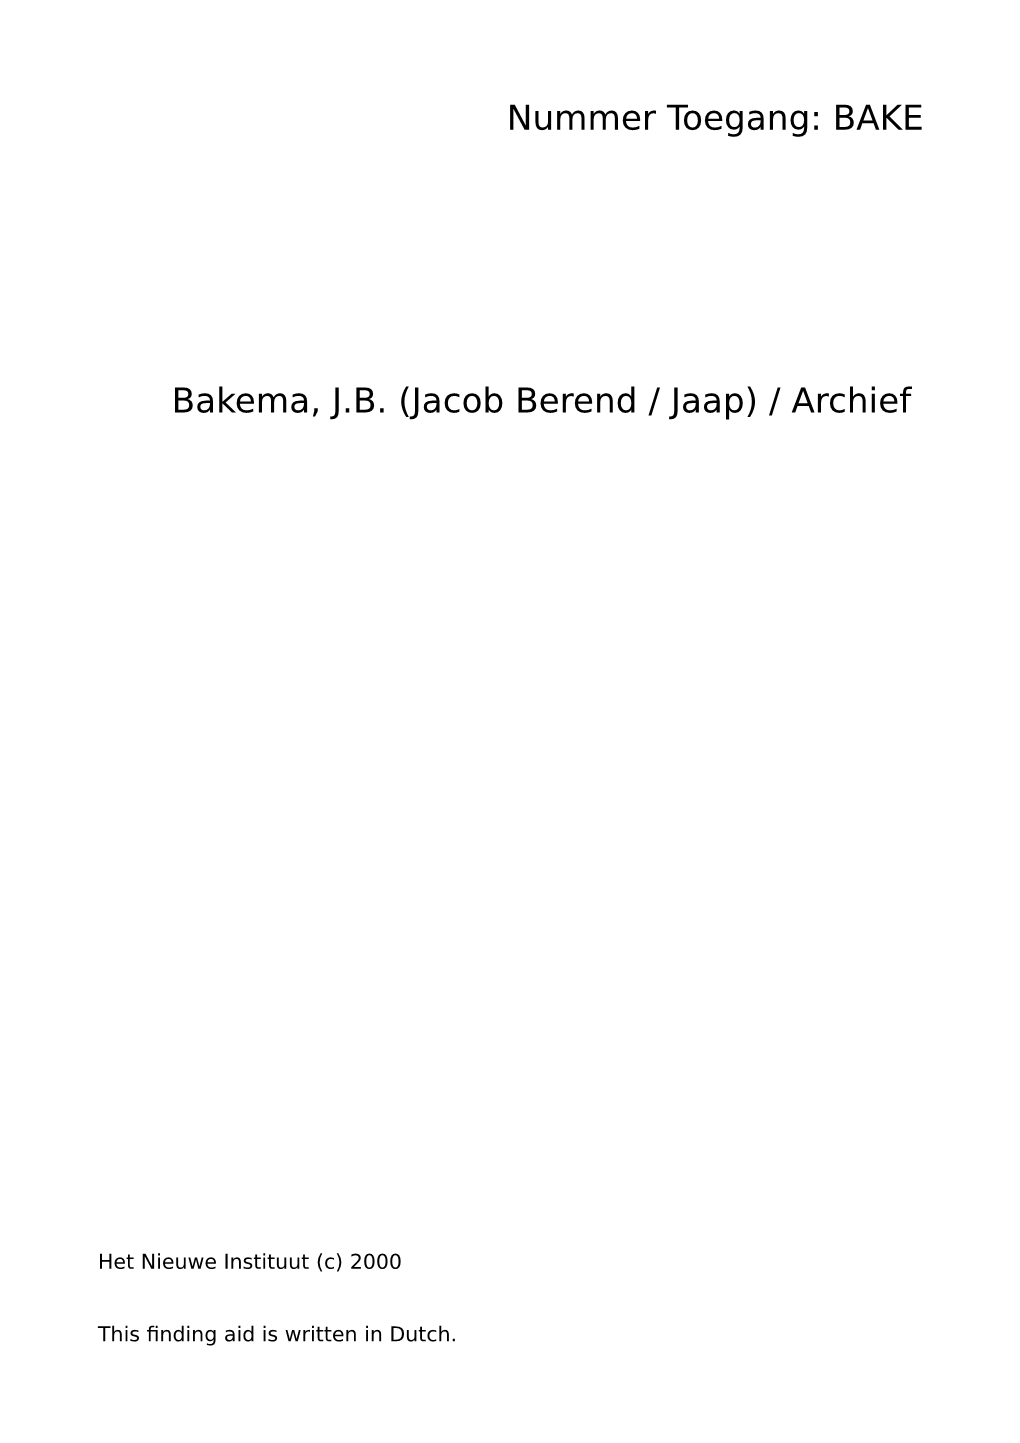 BAKE Bakema, JB (Jacob Berend / Jaap) / Archief